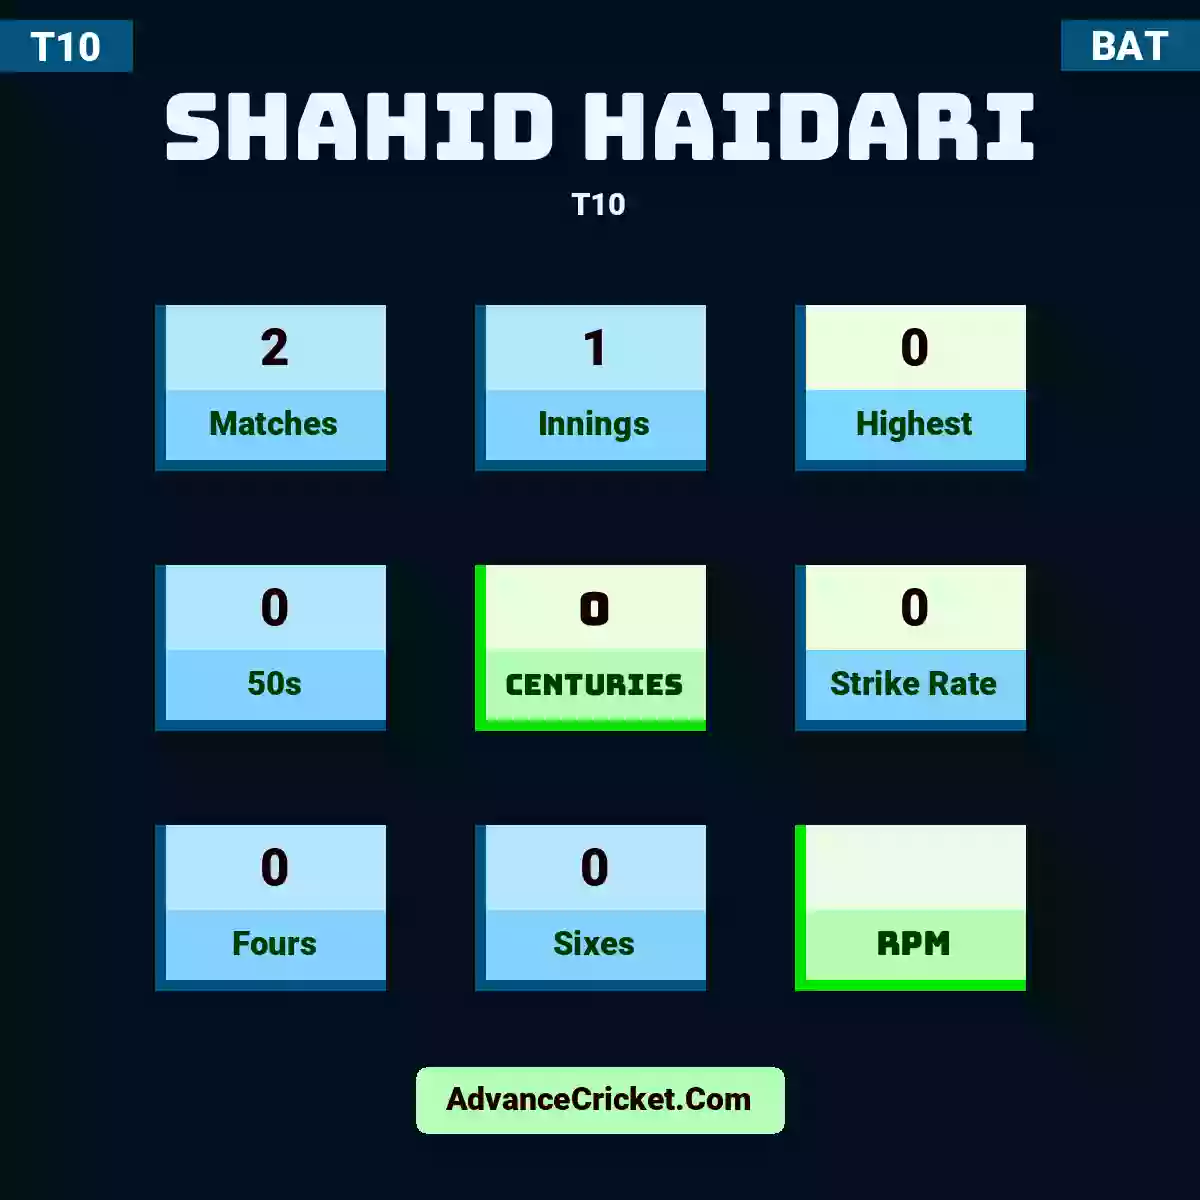 Shahid Haidari T10 , Shahid Haidari played 2 matches, scored 0 runs as highest, 0 half-centuries, and 0 centuries, with a strike rate of 0. S.Haidari hit 0 fours and 0 sixes.